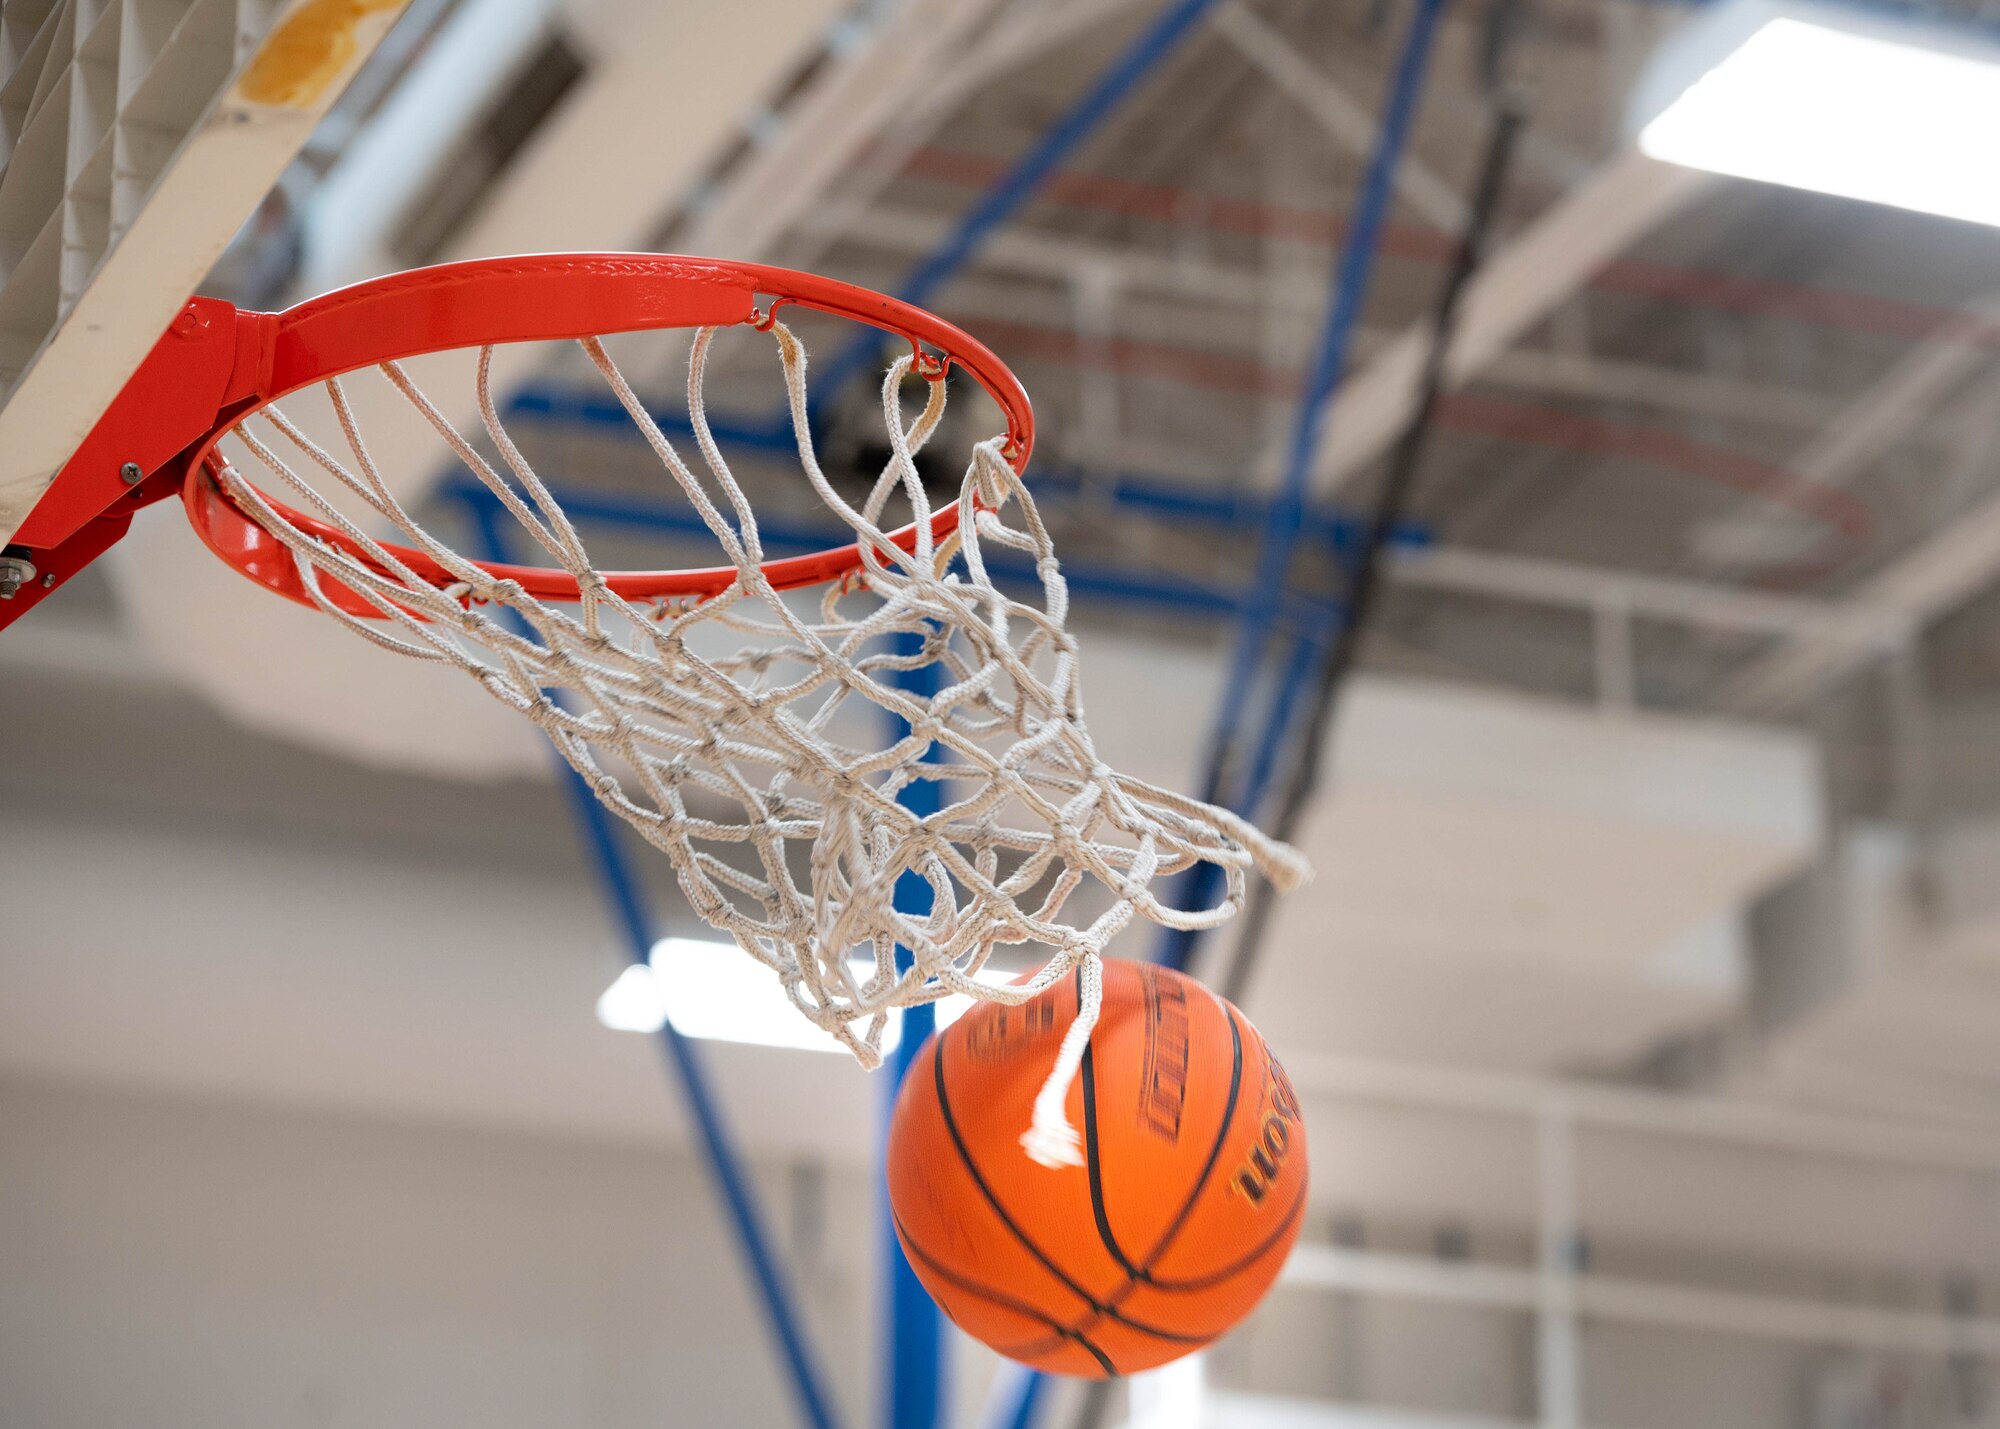 A basketball falls through a hoop.